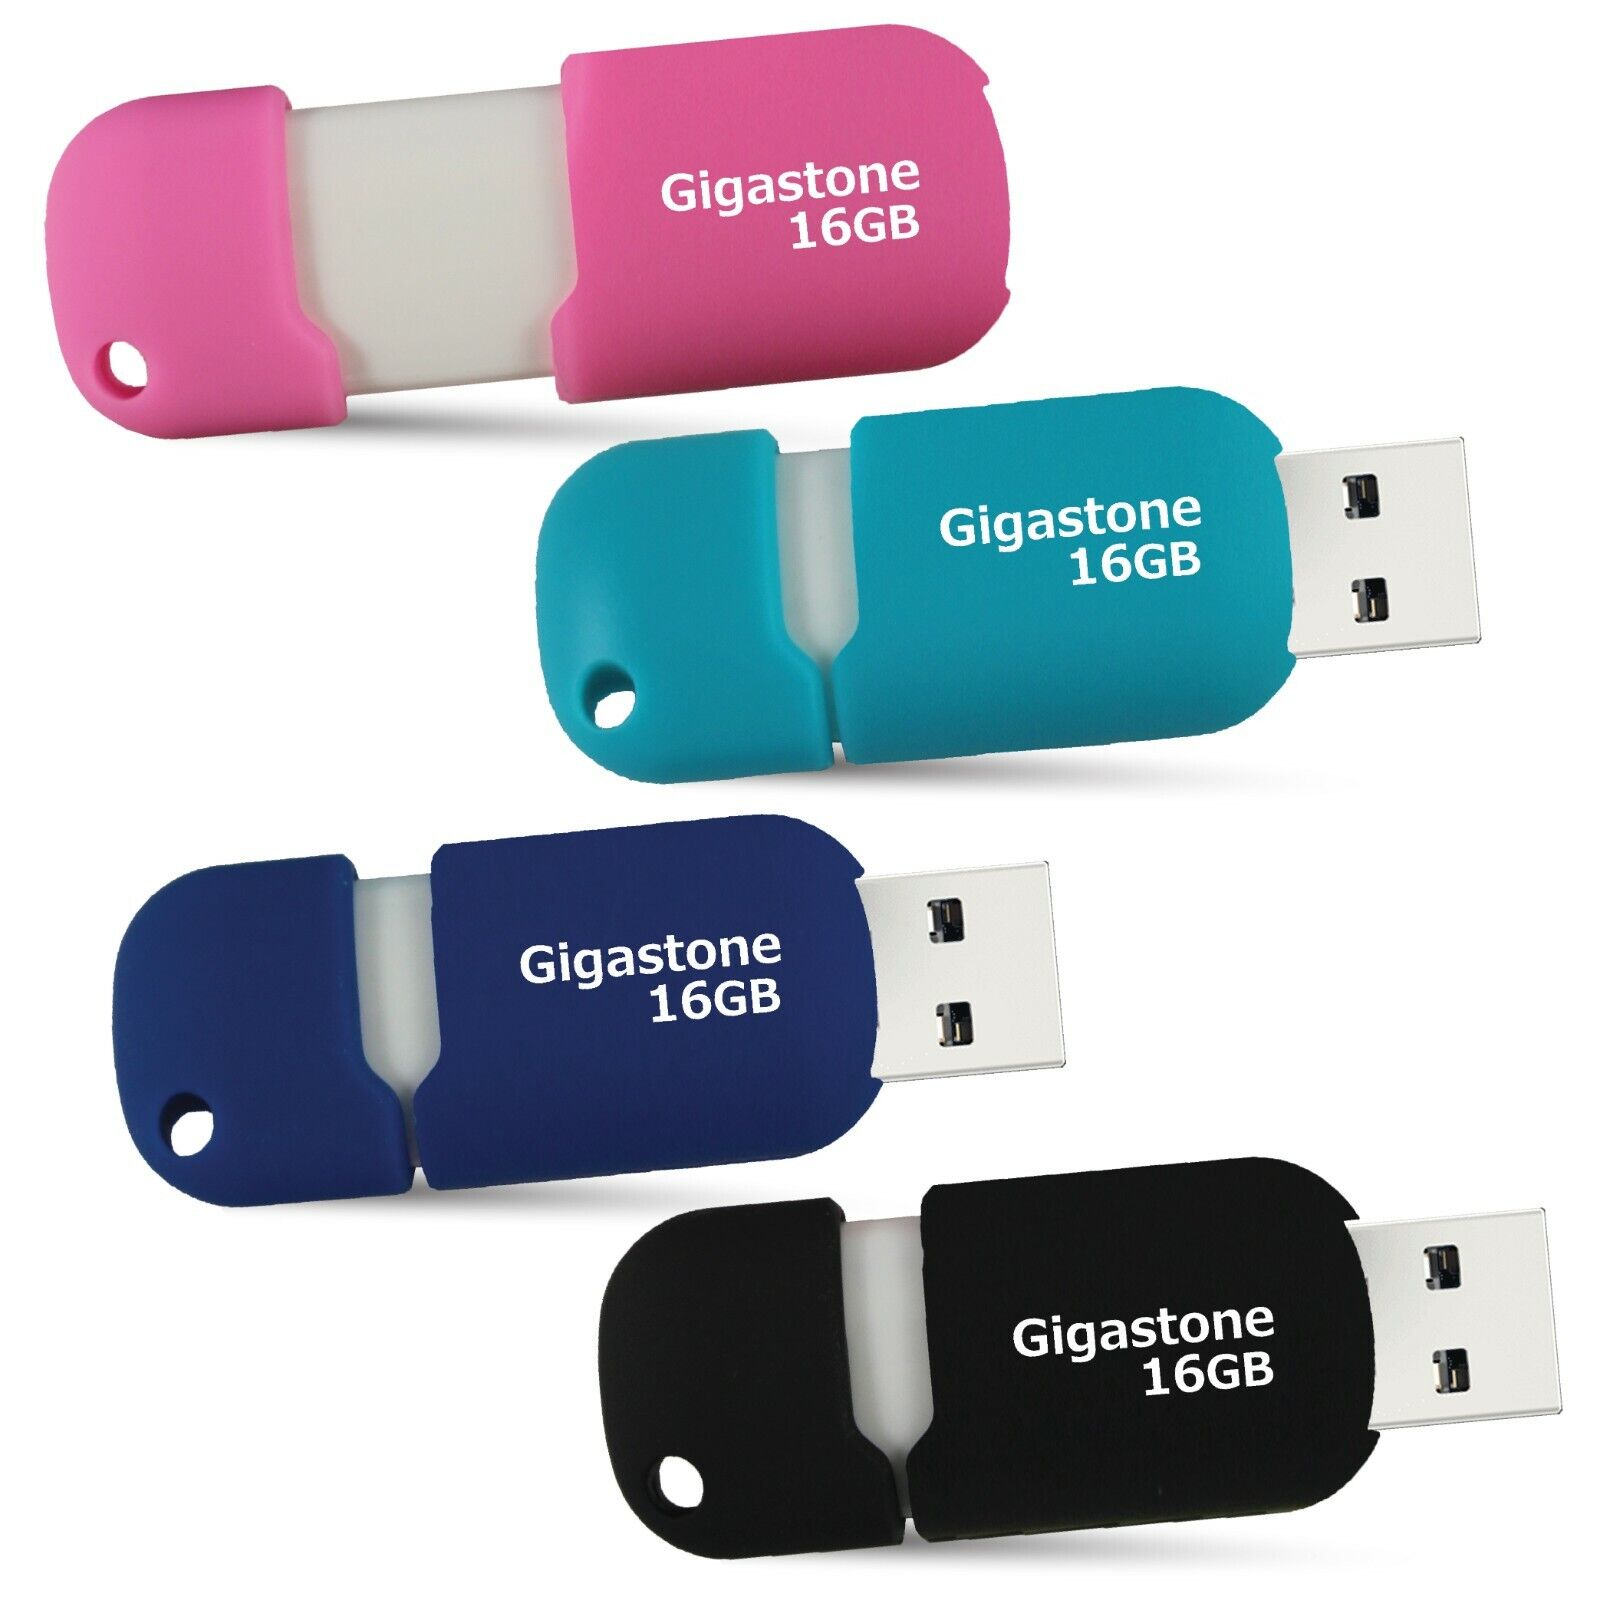 Gigastone 16GB USB 2.0 Flash Drive Thumb Drive memory stick Retractable - 4 Pack